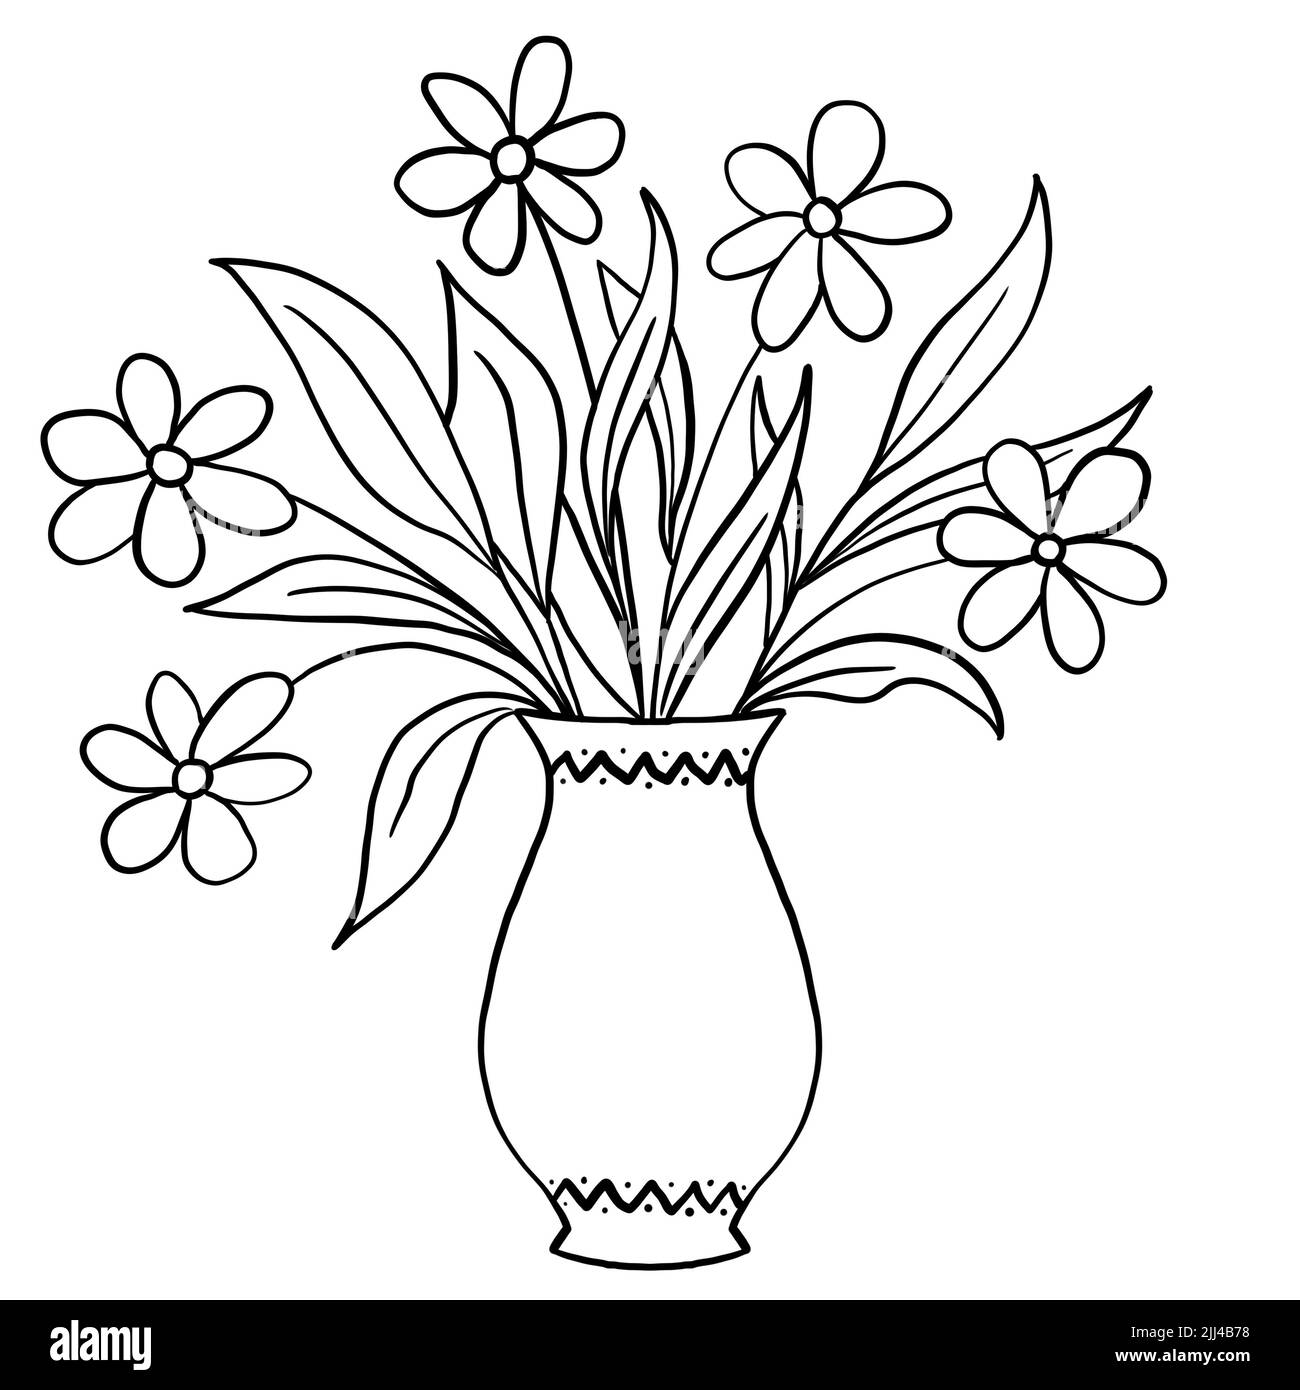 Page 2 | Flower Vase Drawing Designs Images - Free Download on Freepik-saigonsouth.com.vn